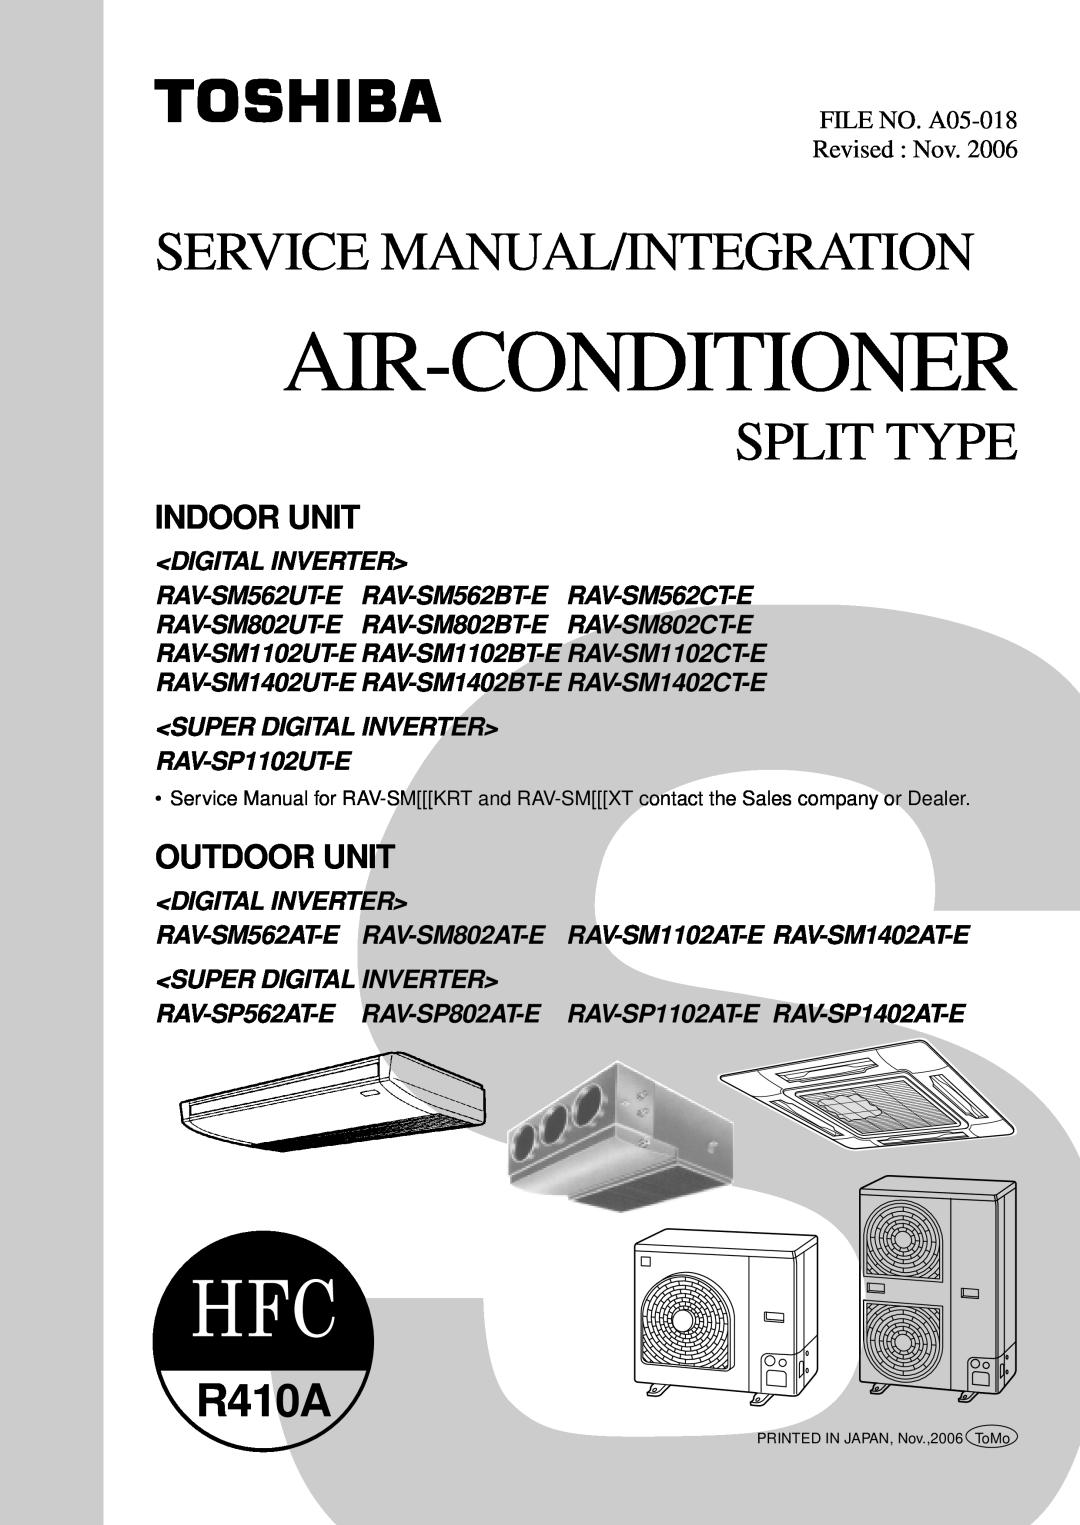 Toshiba RAV-SM1402UT-E service manual Indoor Unit, Outdoor Unit, <Super Digital Inverter>, Air-Conditioner, Split Type 